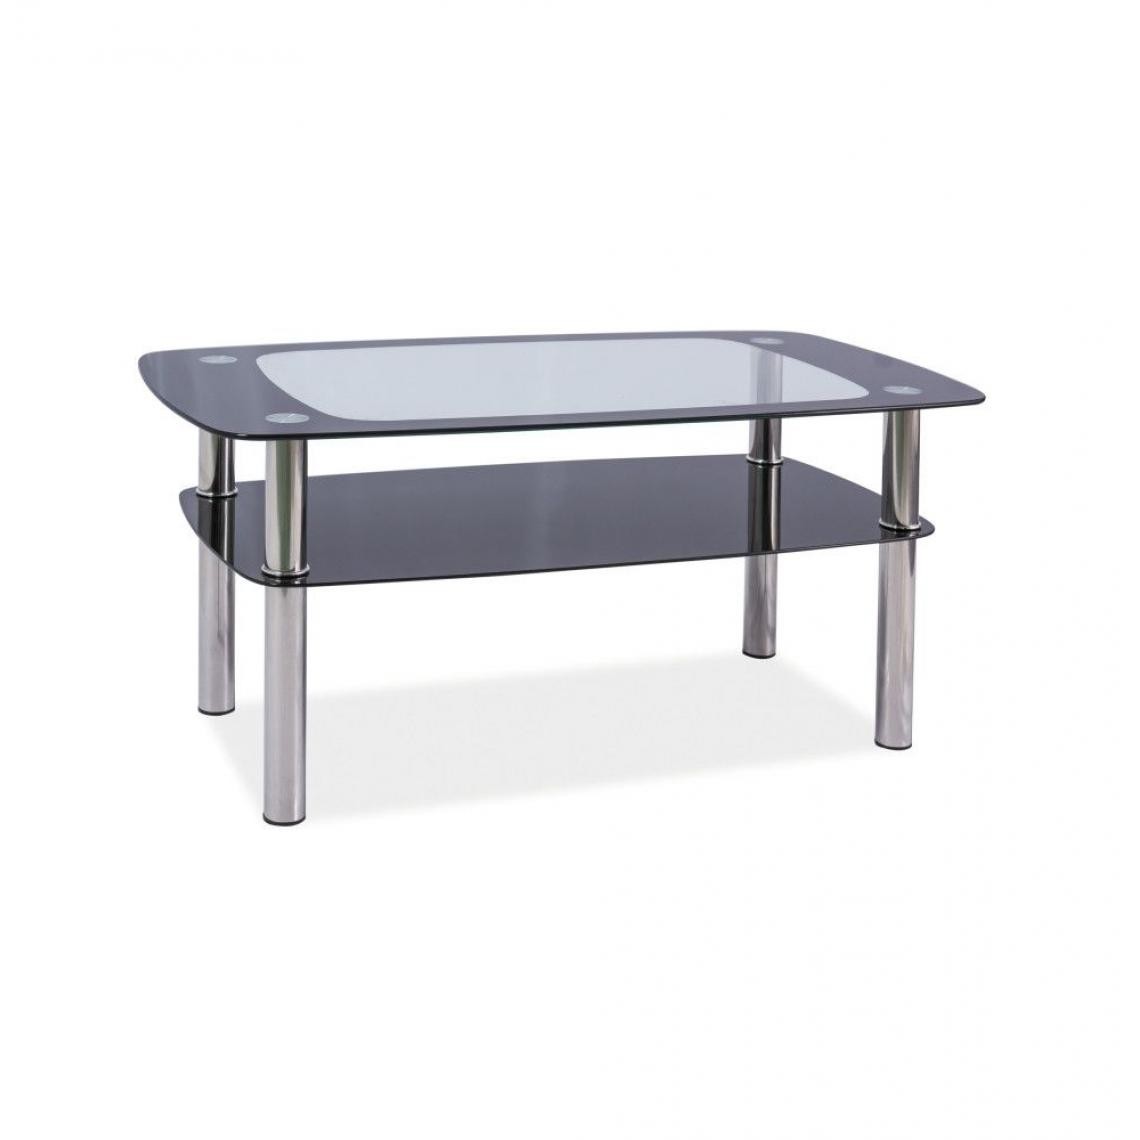 Ac-Deco - Table basse en verre - L 100 cm x l 60 cm x H 55 cm - Rava - Tables basses